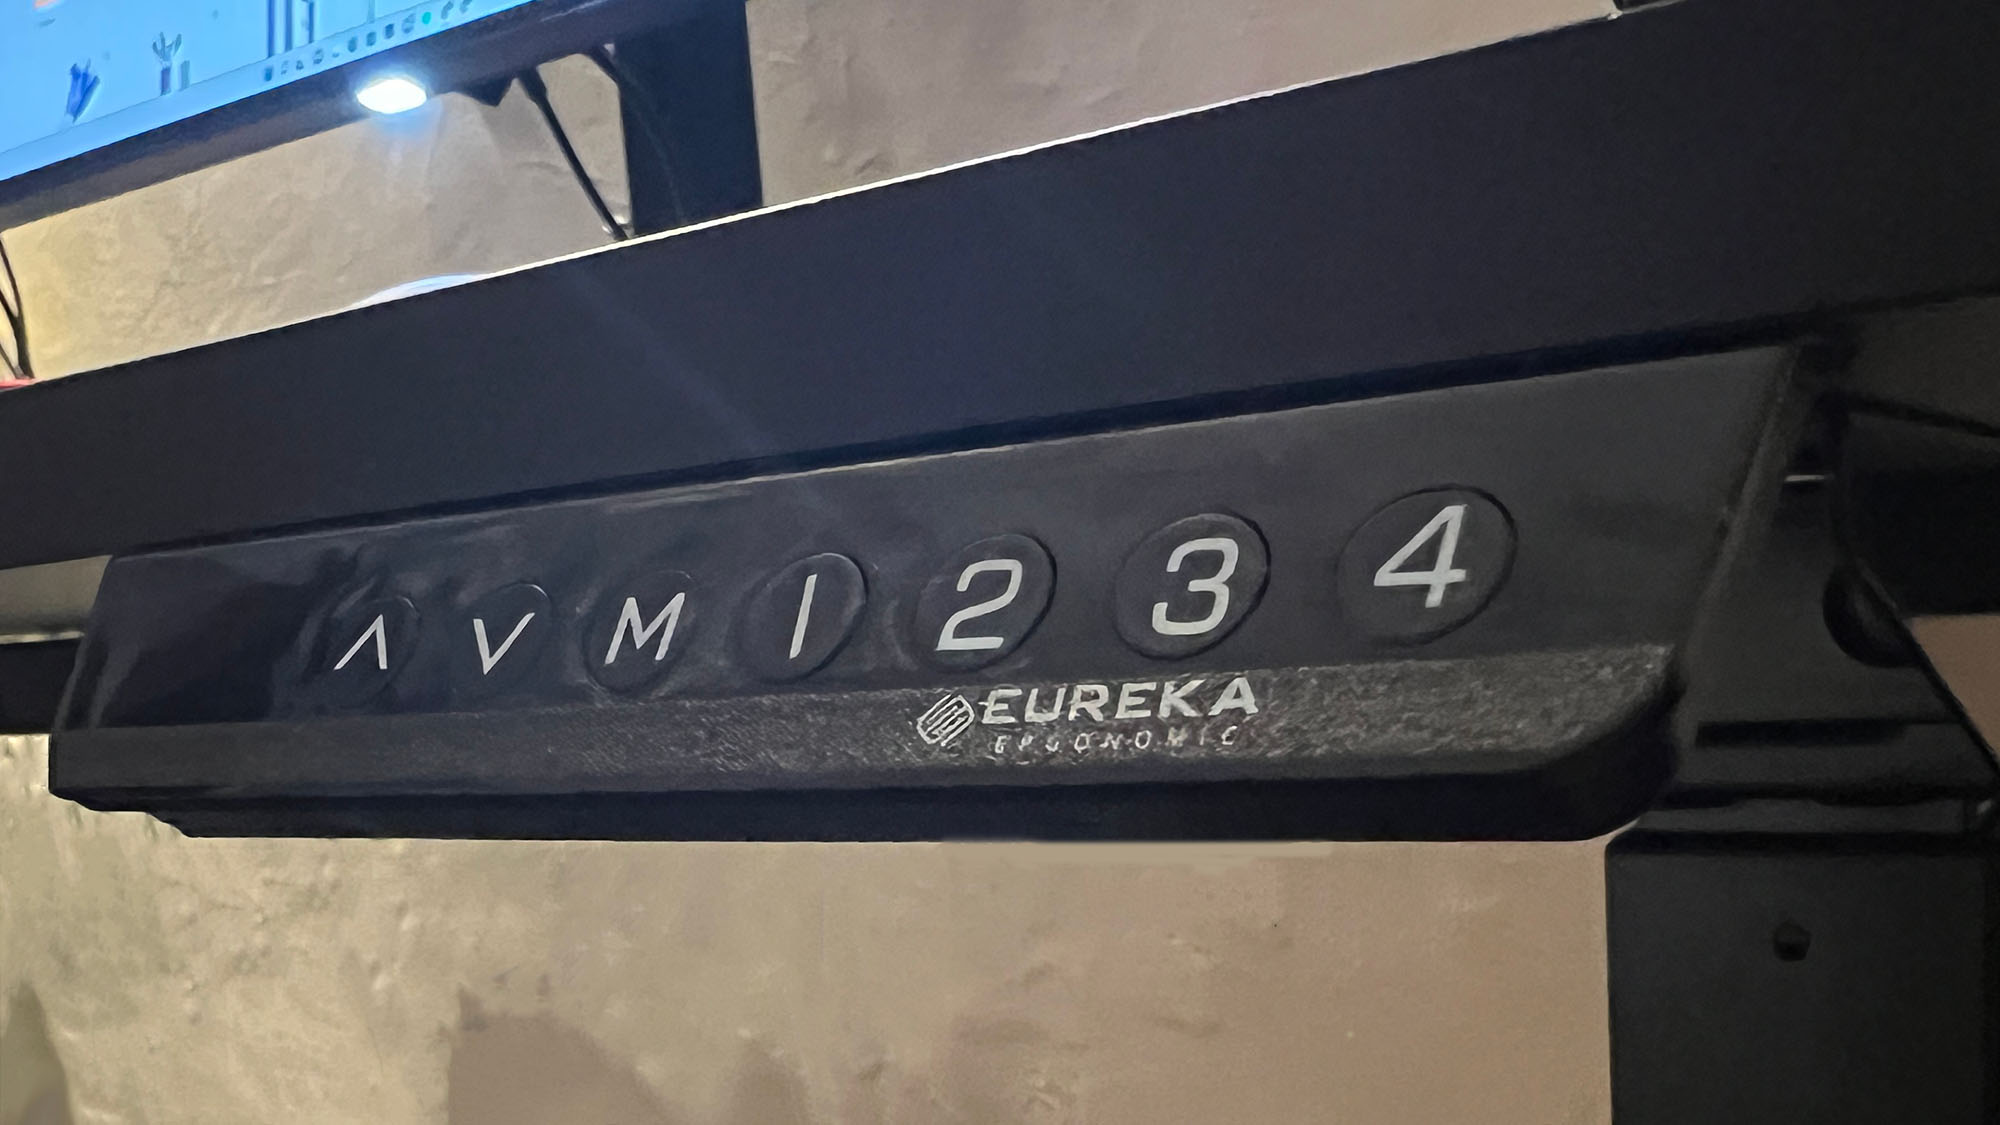 The height adjustment controls on the Eureka EGD 60